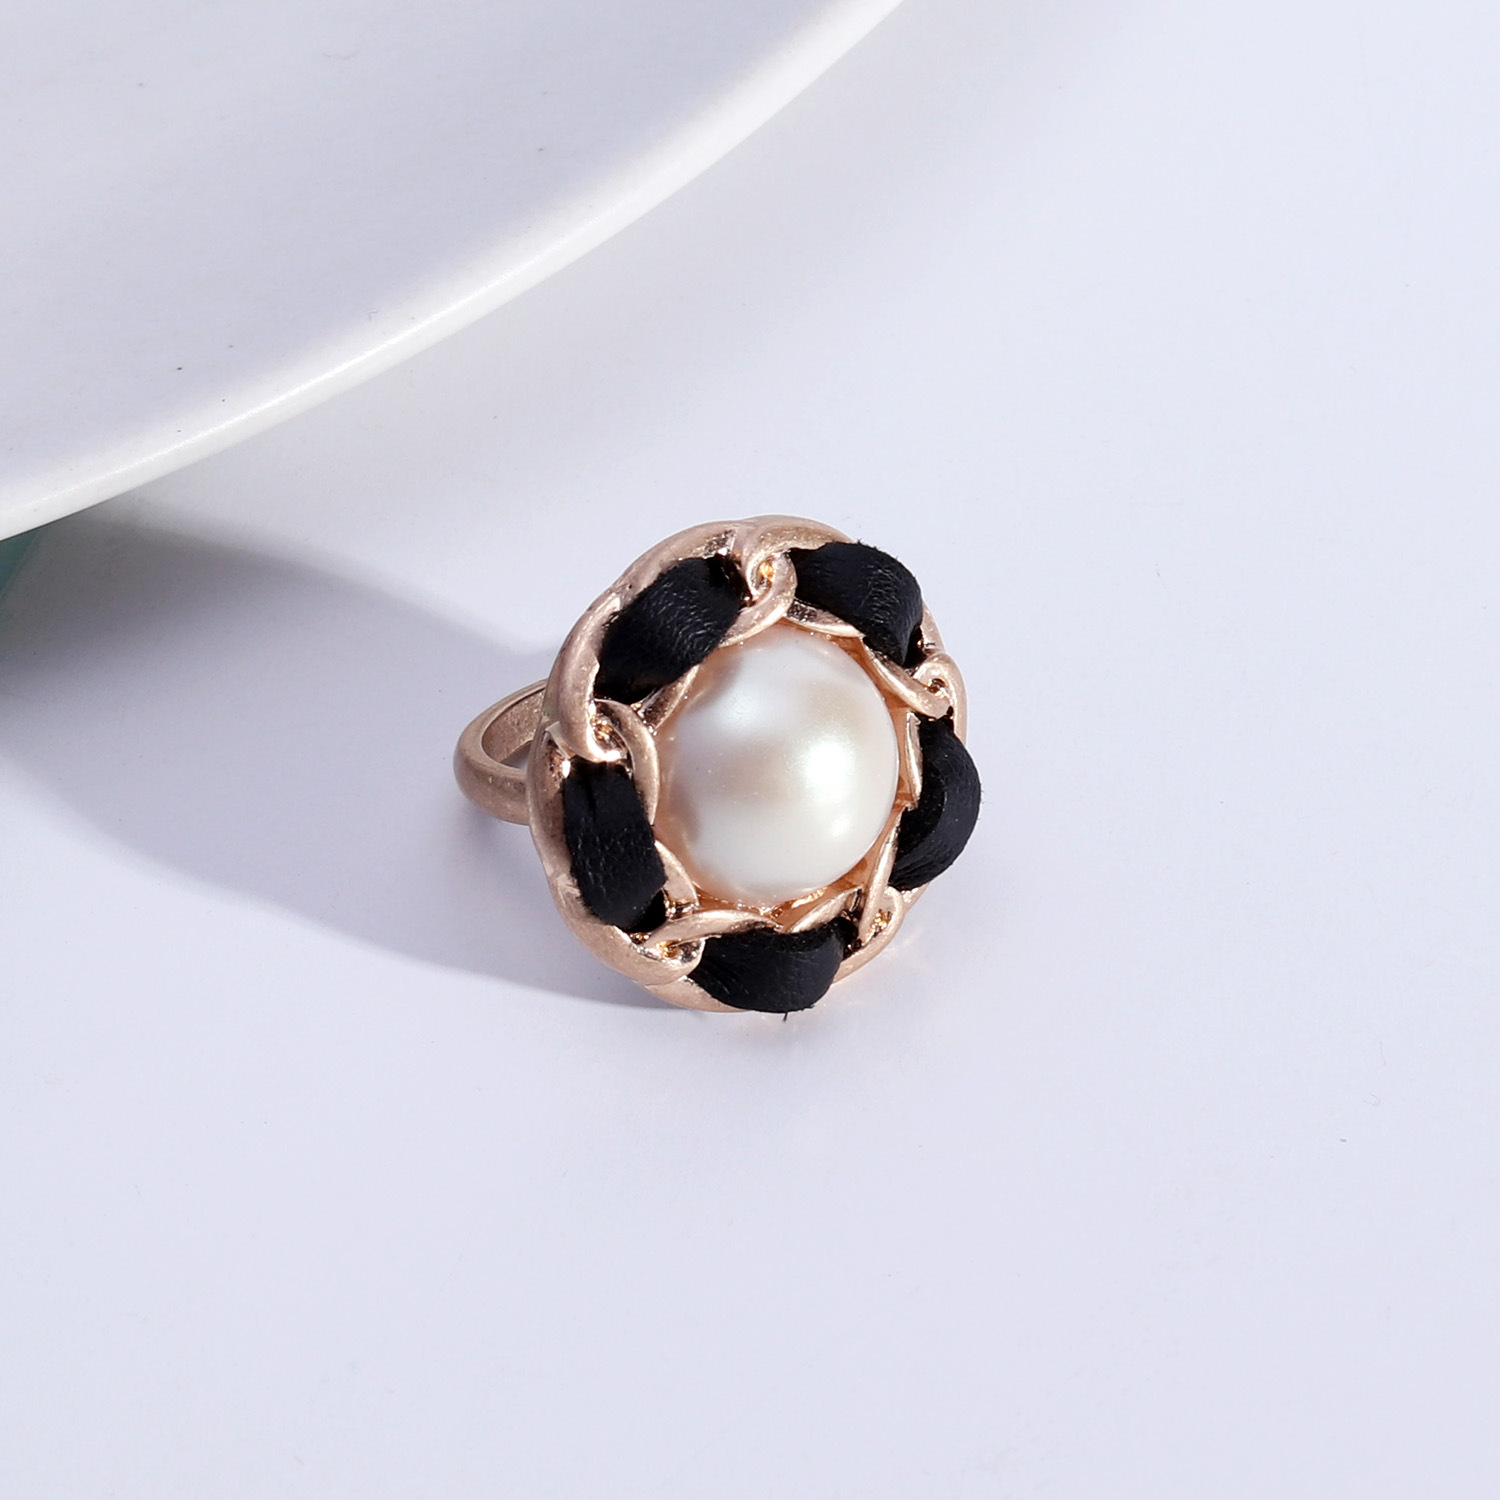 1:white pearl